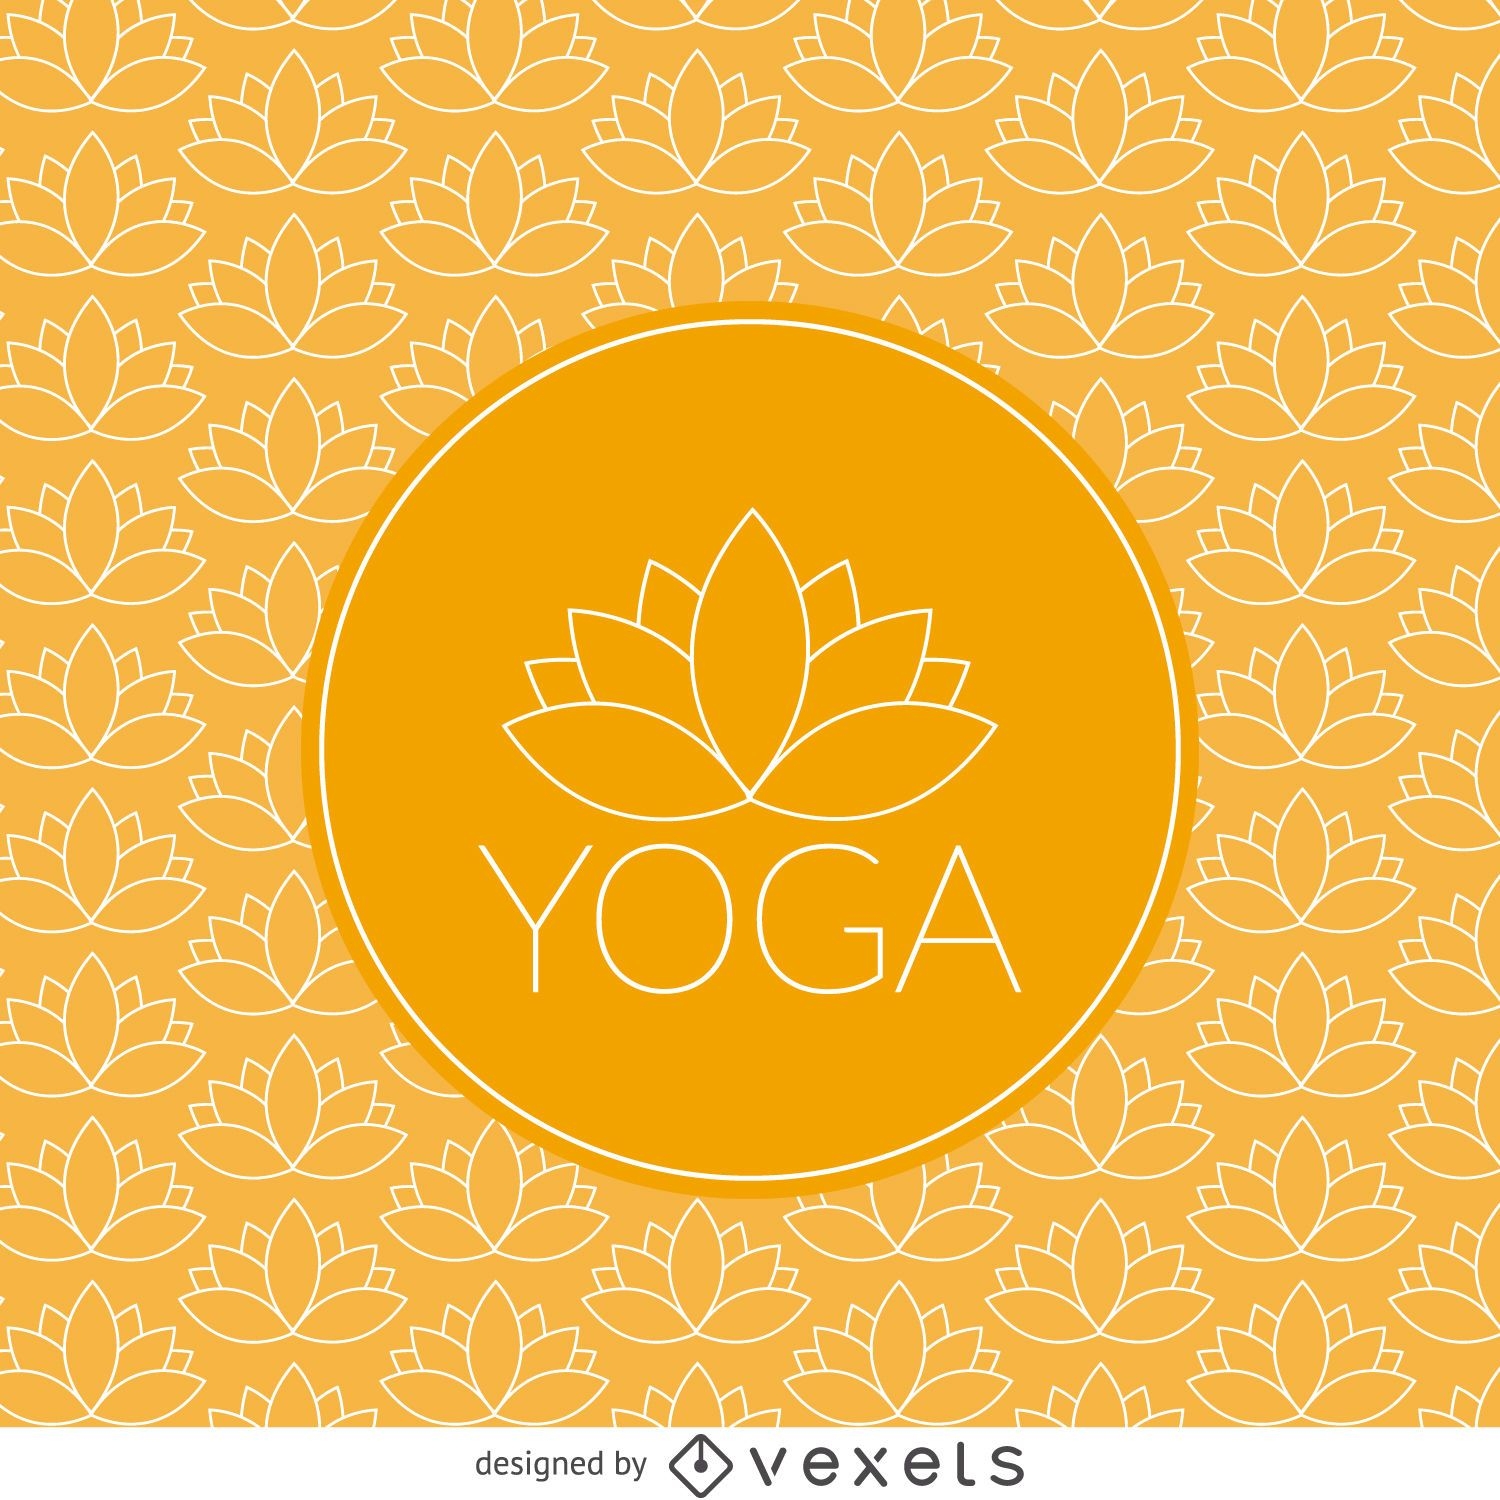 Yoga lotus pattern with label